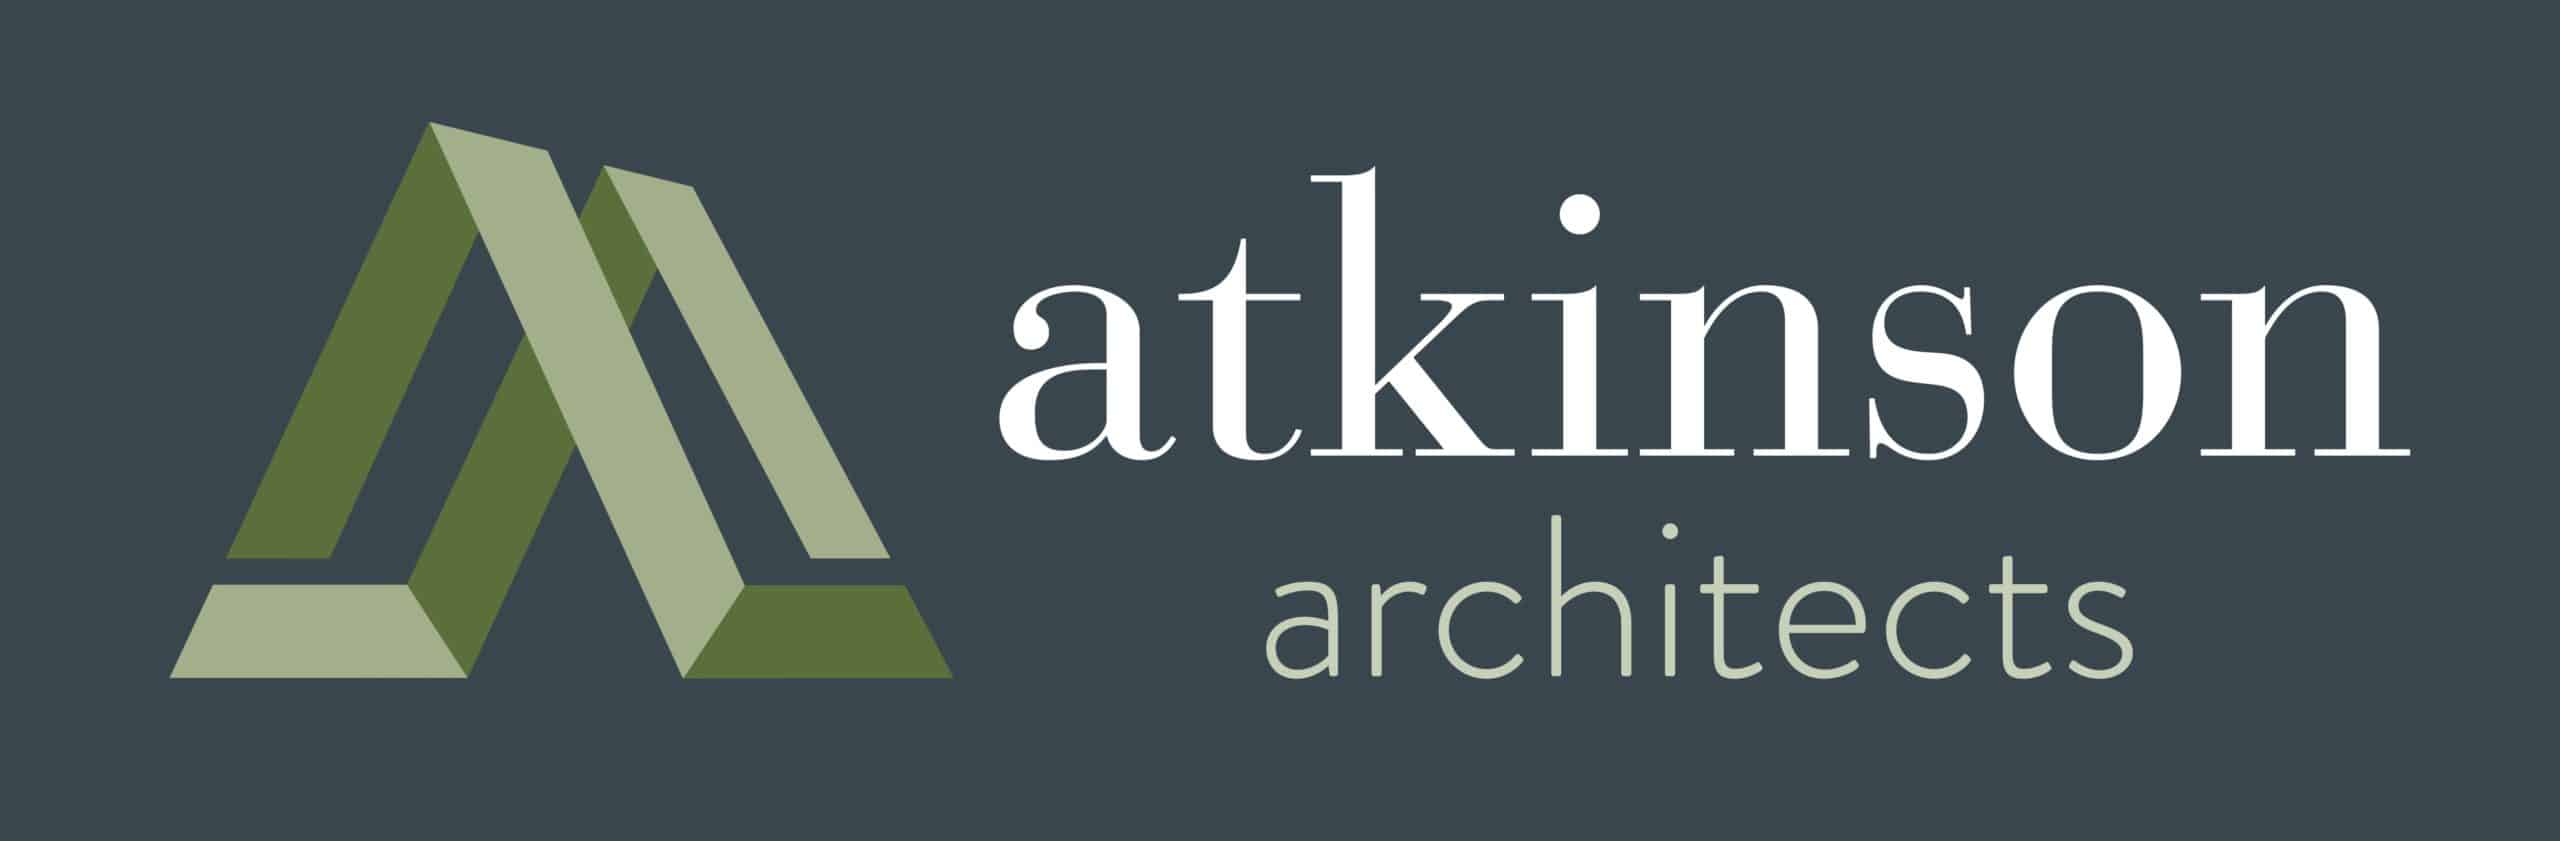 Atkinson Architects logo